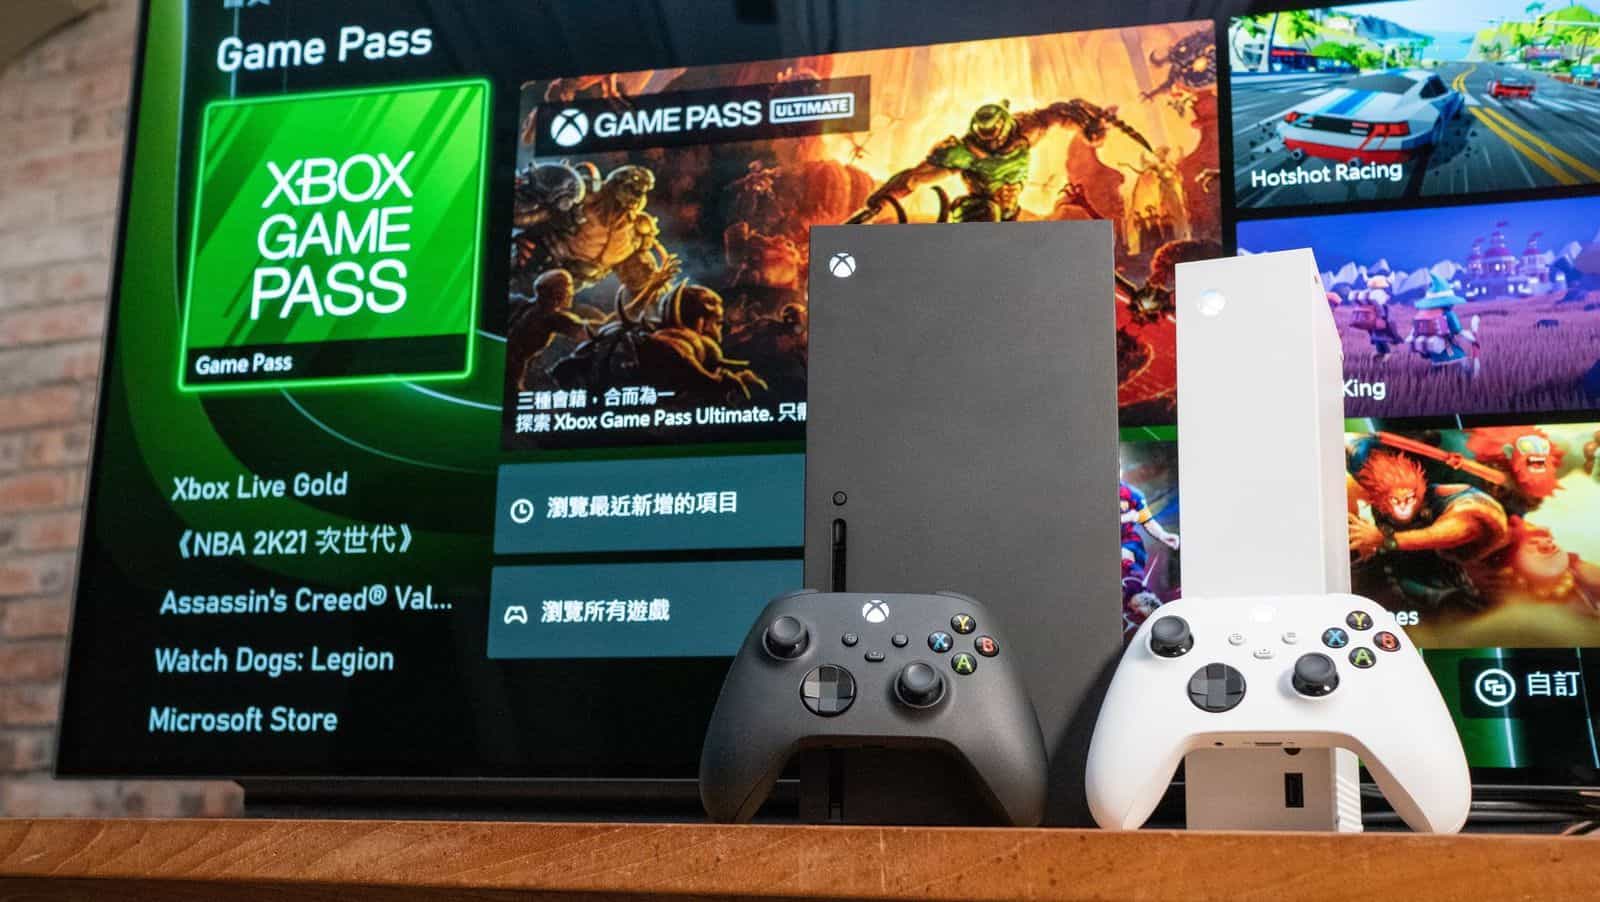 Икс бокс. Xbox game Pass Ultimate. ГЕЙМПАСС ультимейт Голд. Игры на Xbox по созданию игр.